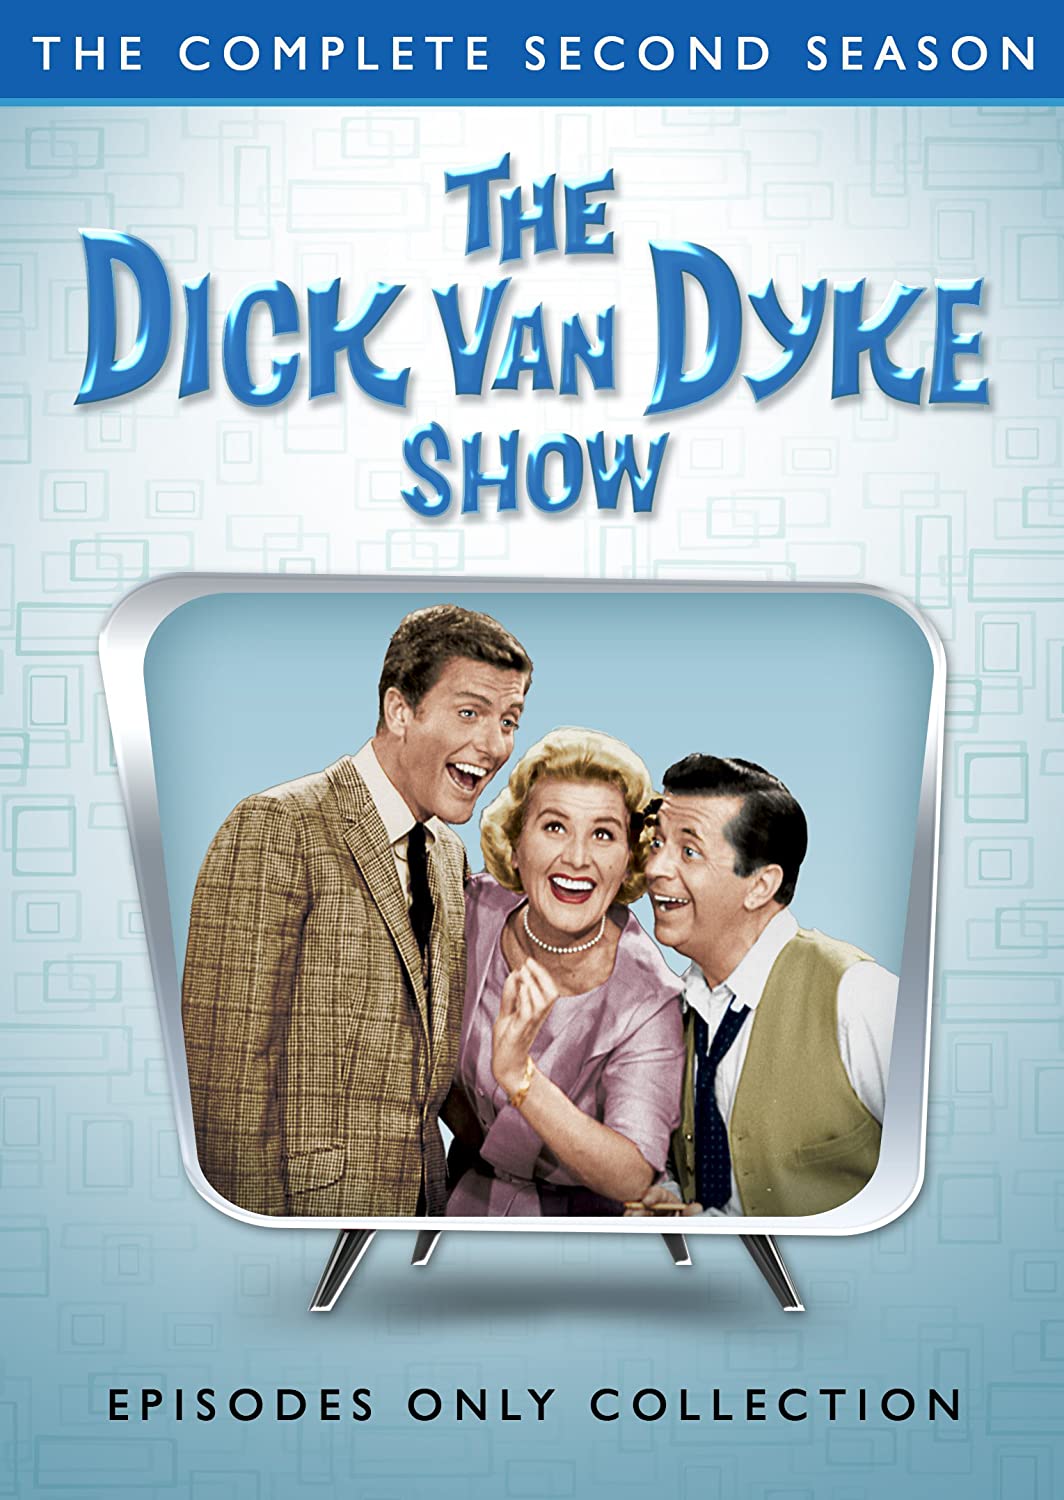 The dick van dyke show genre